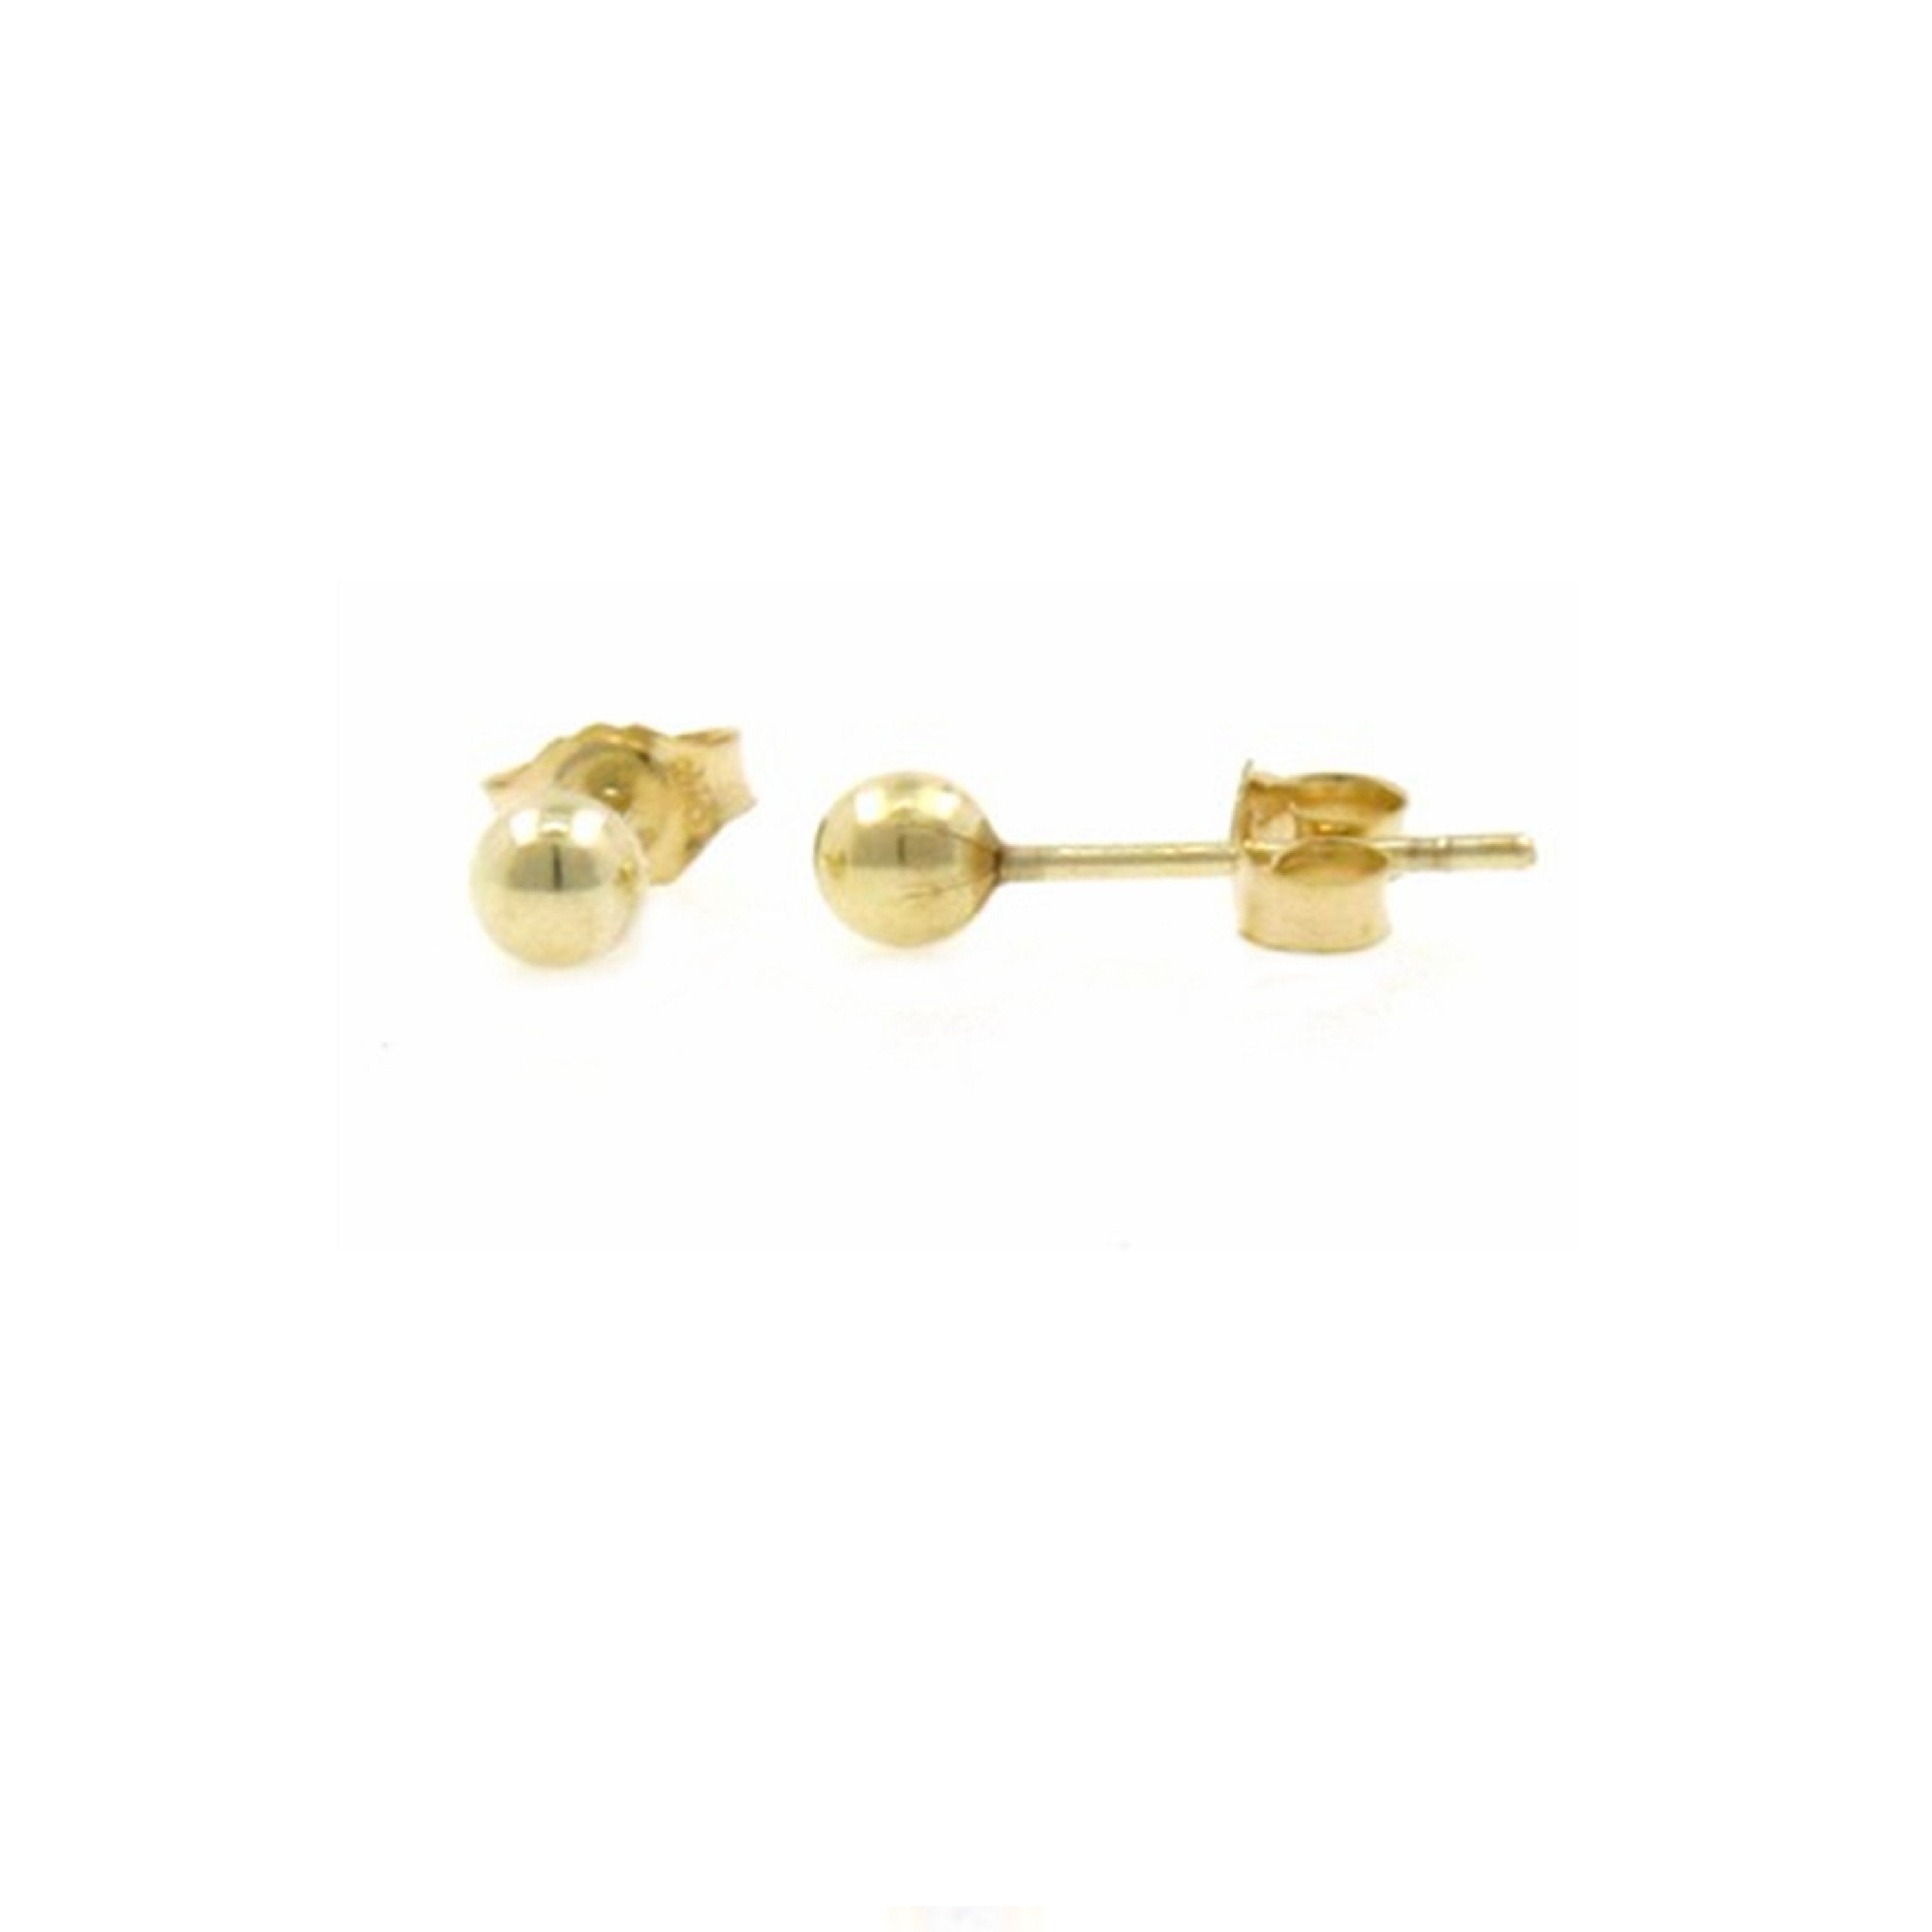 9ct Gold Earrings 3mm Ball Stud